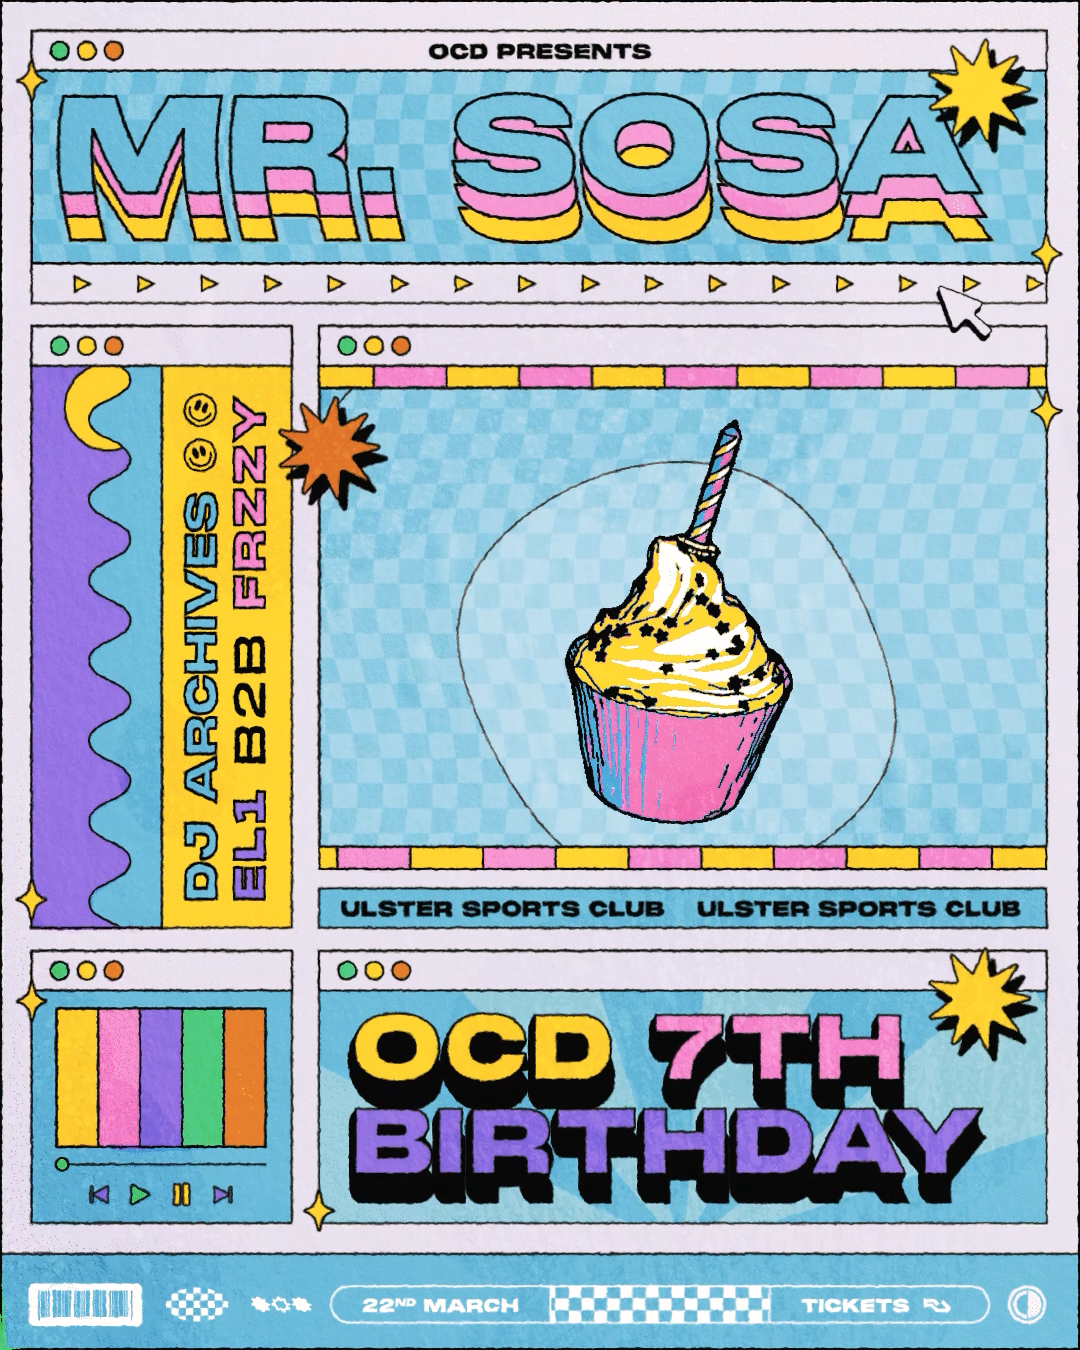 OCD 7TH BIRTHDAY with Mr. Sosa - フライヤー表